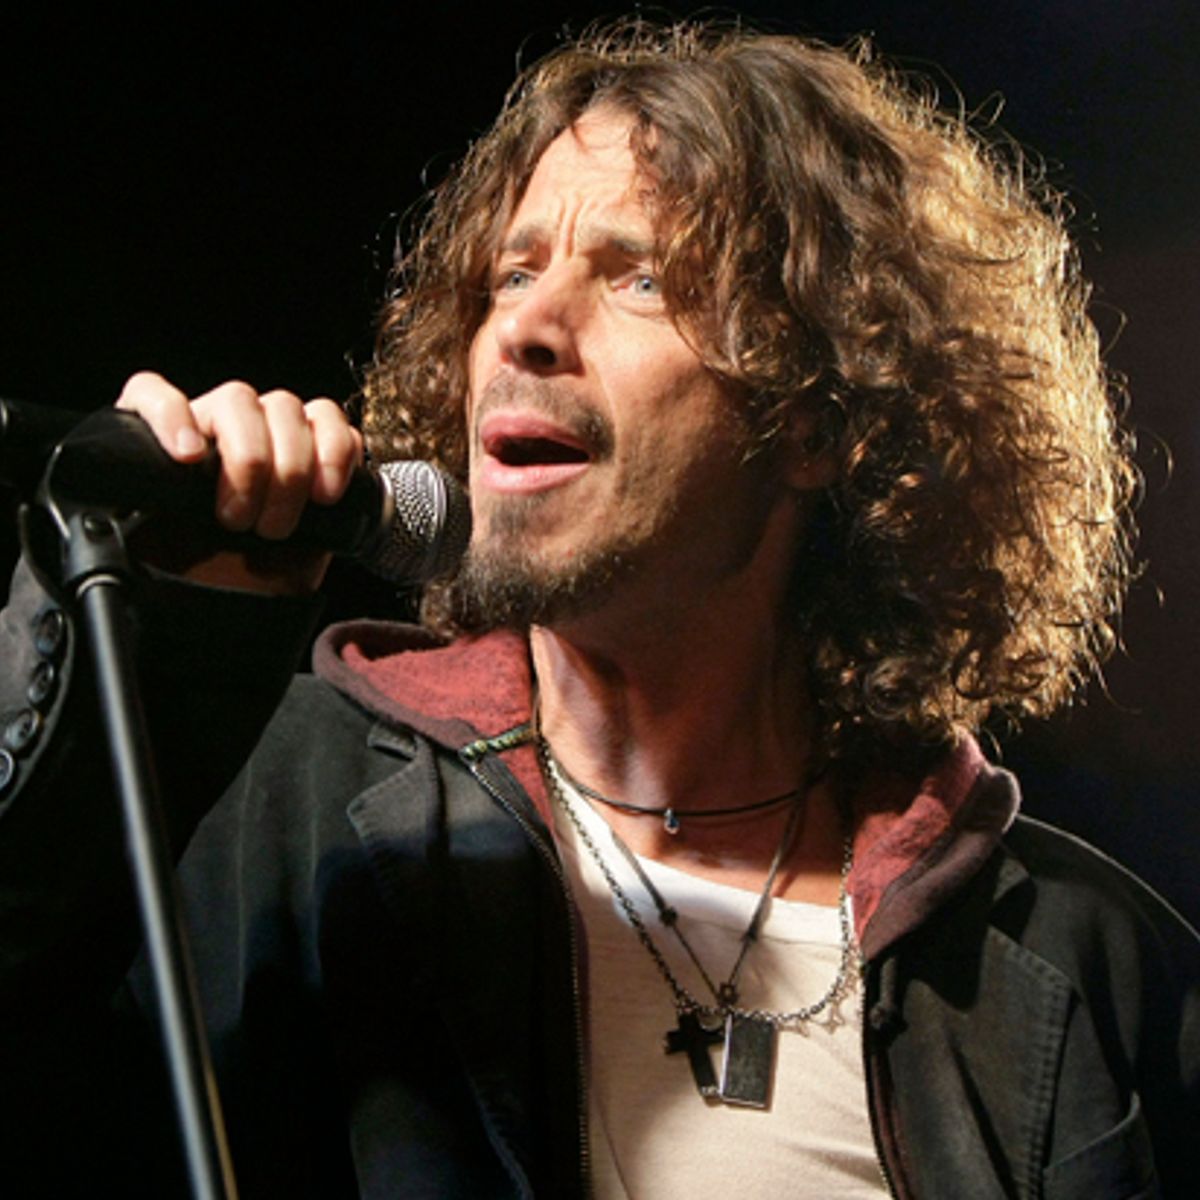 Chris Cornell S Talents Transcend The Grunge Genre He Helped Create Salon Com